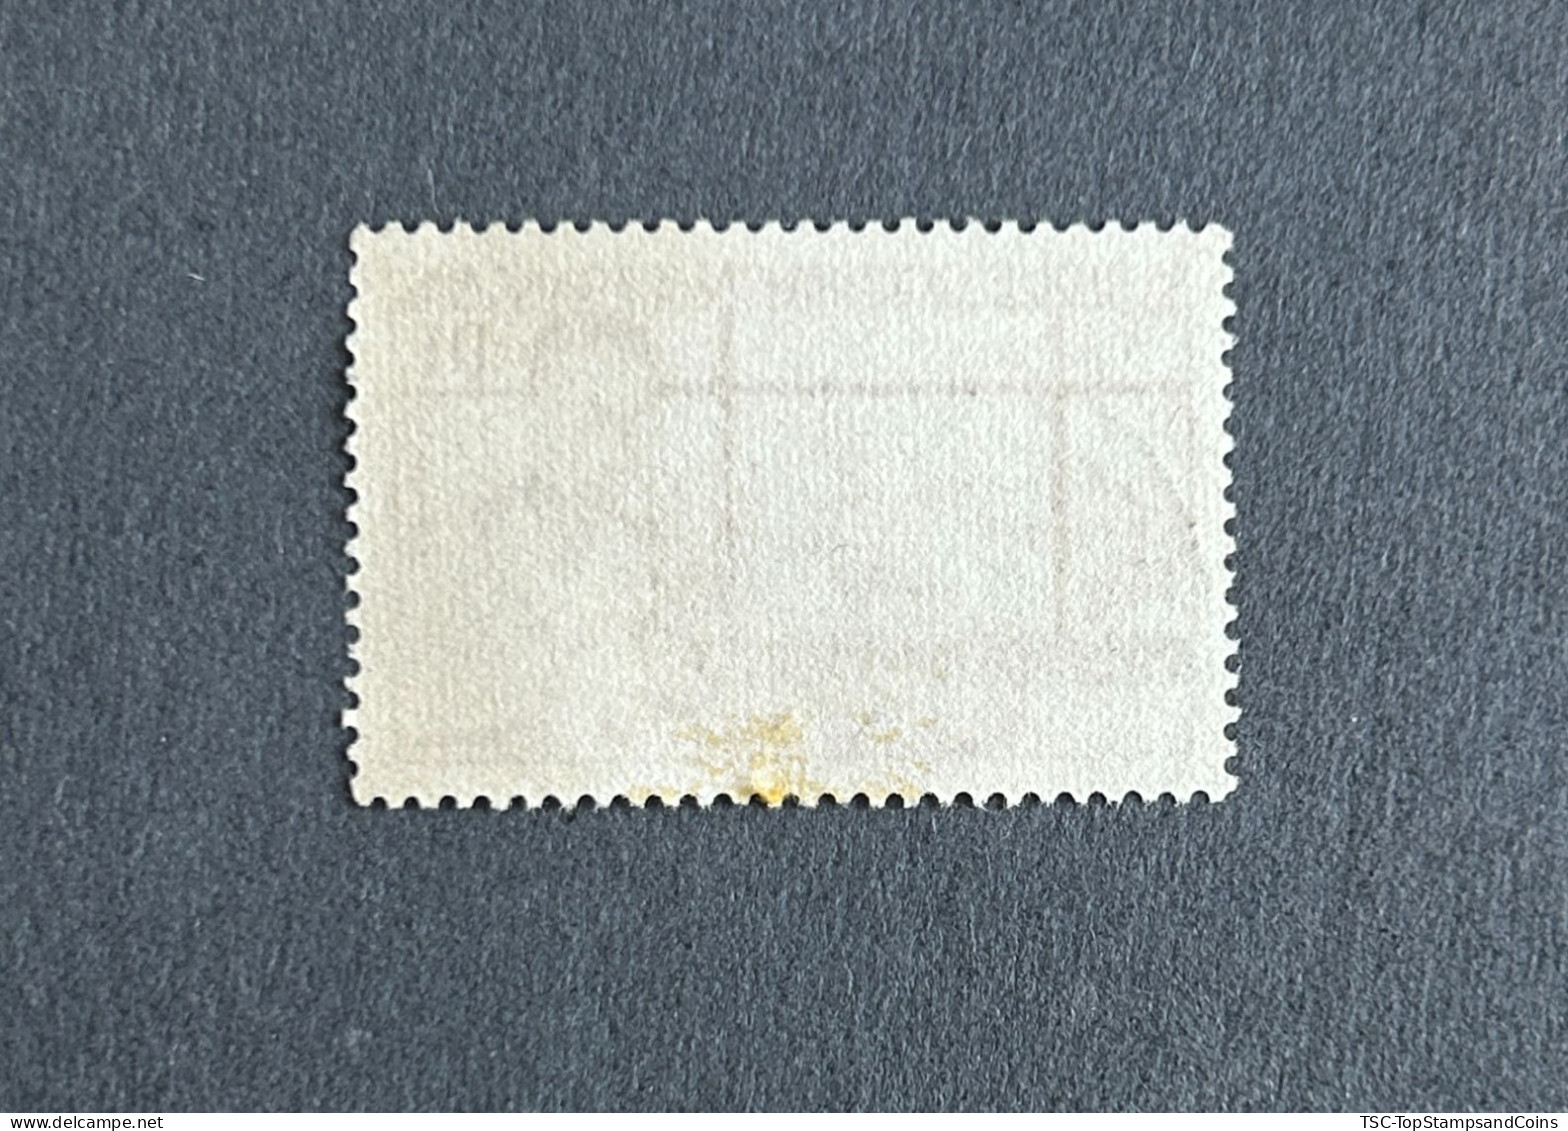 FRAWA0048U4 - Local People - Medical Laboratory - 15 F Used Stamp - AOF - 1953 - Gebruikt